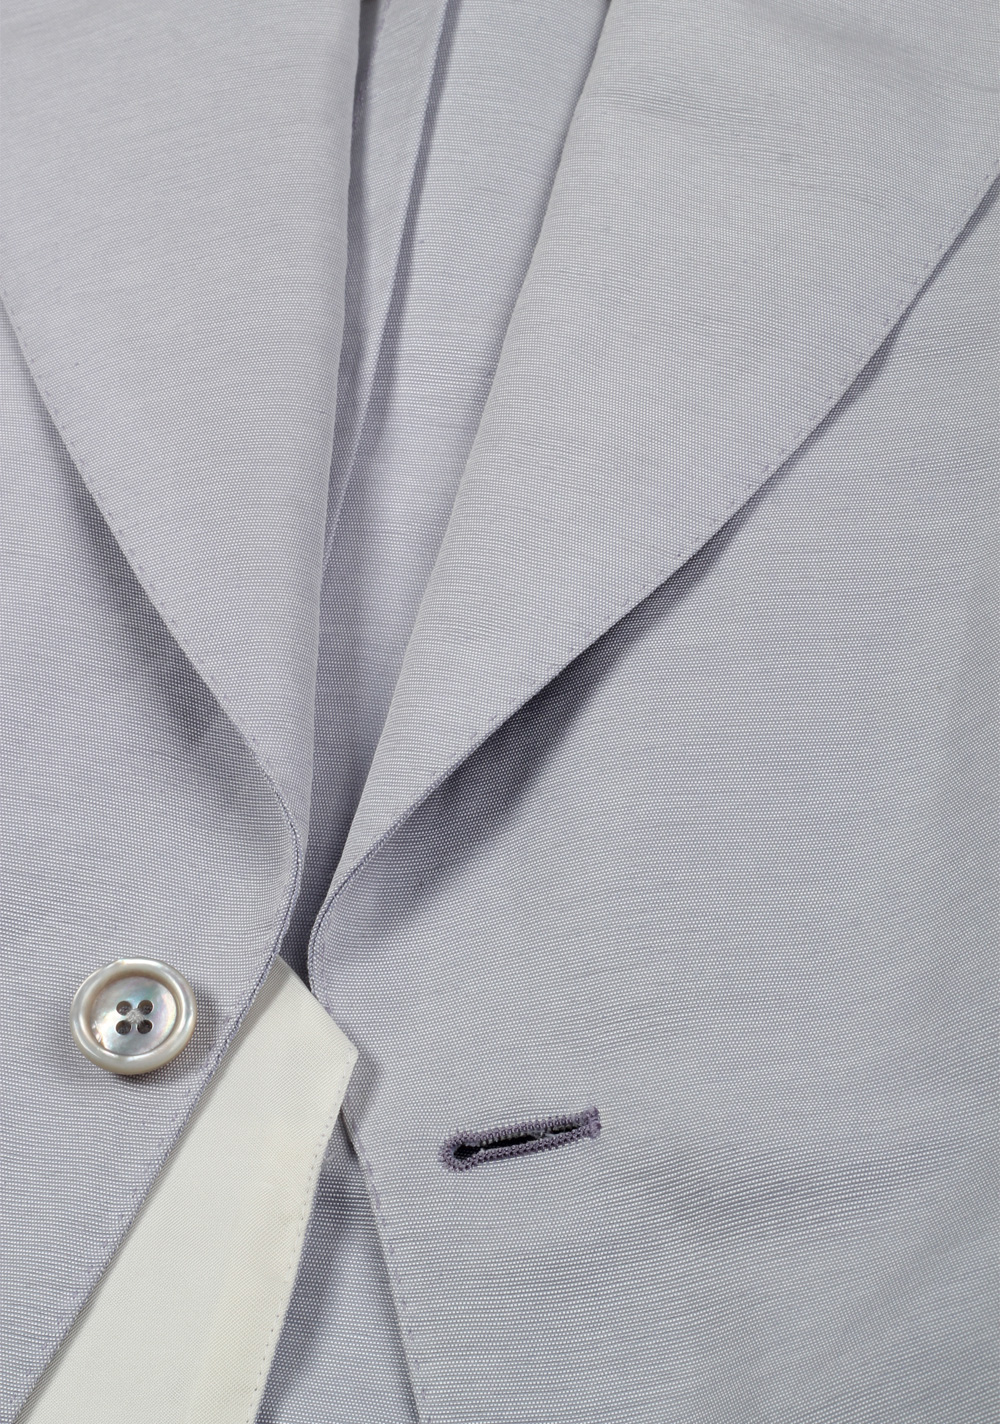 TOM FORD Atticus Lavender Suit Size 46 / 36R U.S. In Linen Silk | Costume Limité